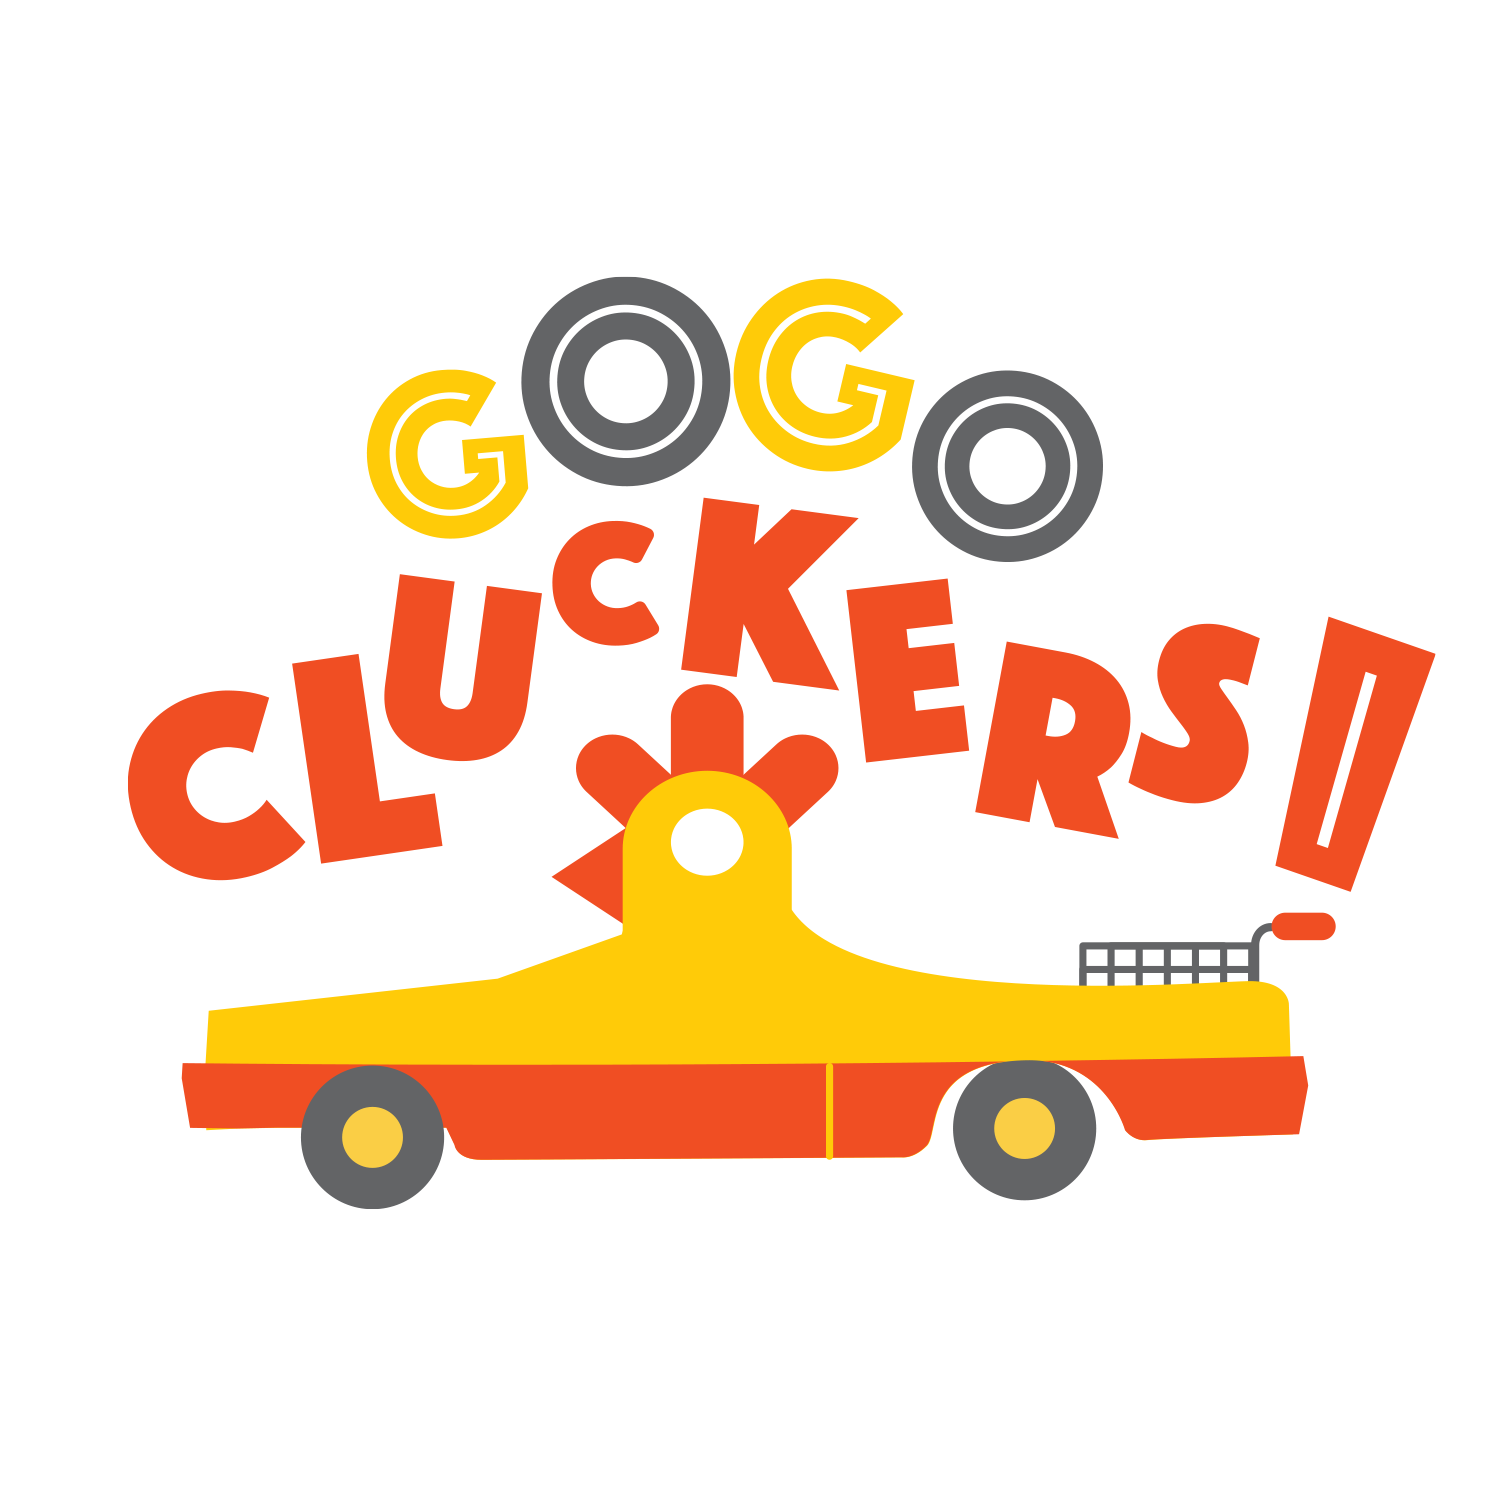 GoGo Cluckers Logo